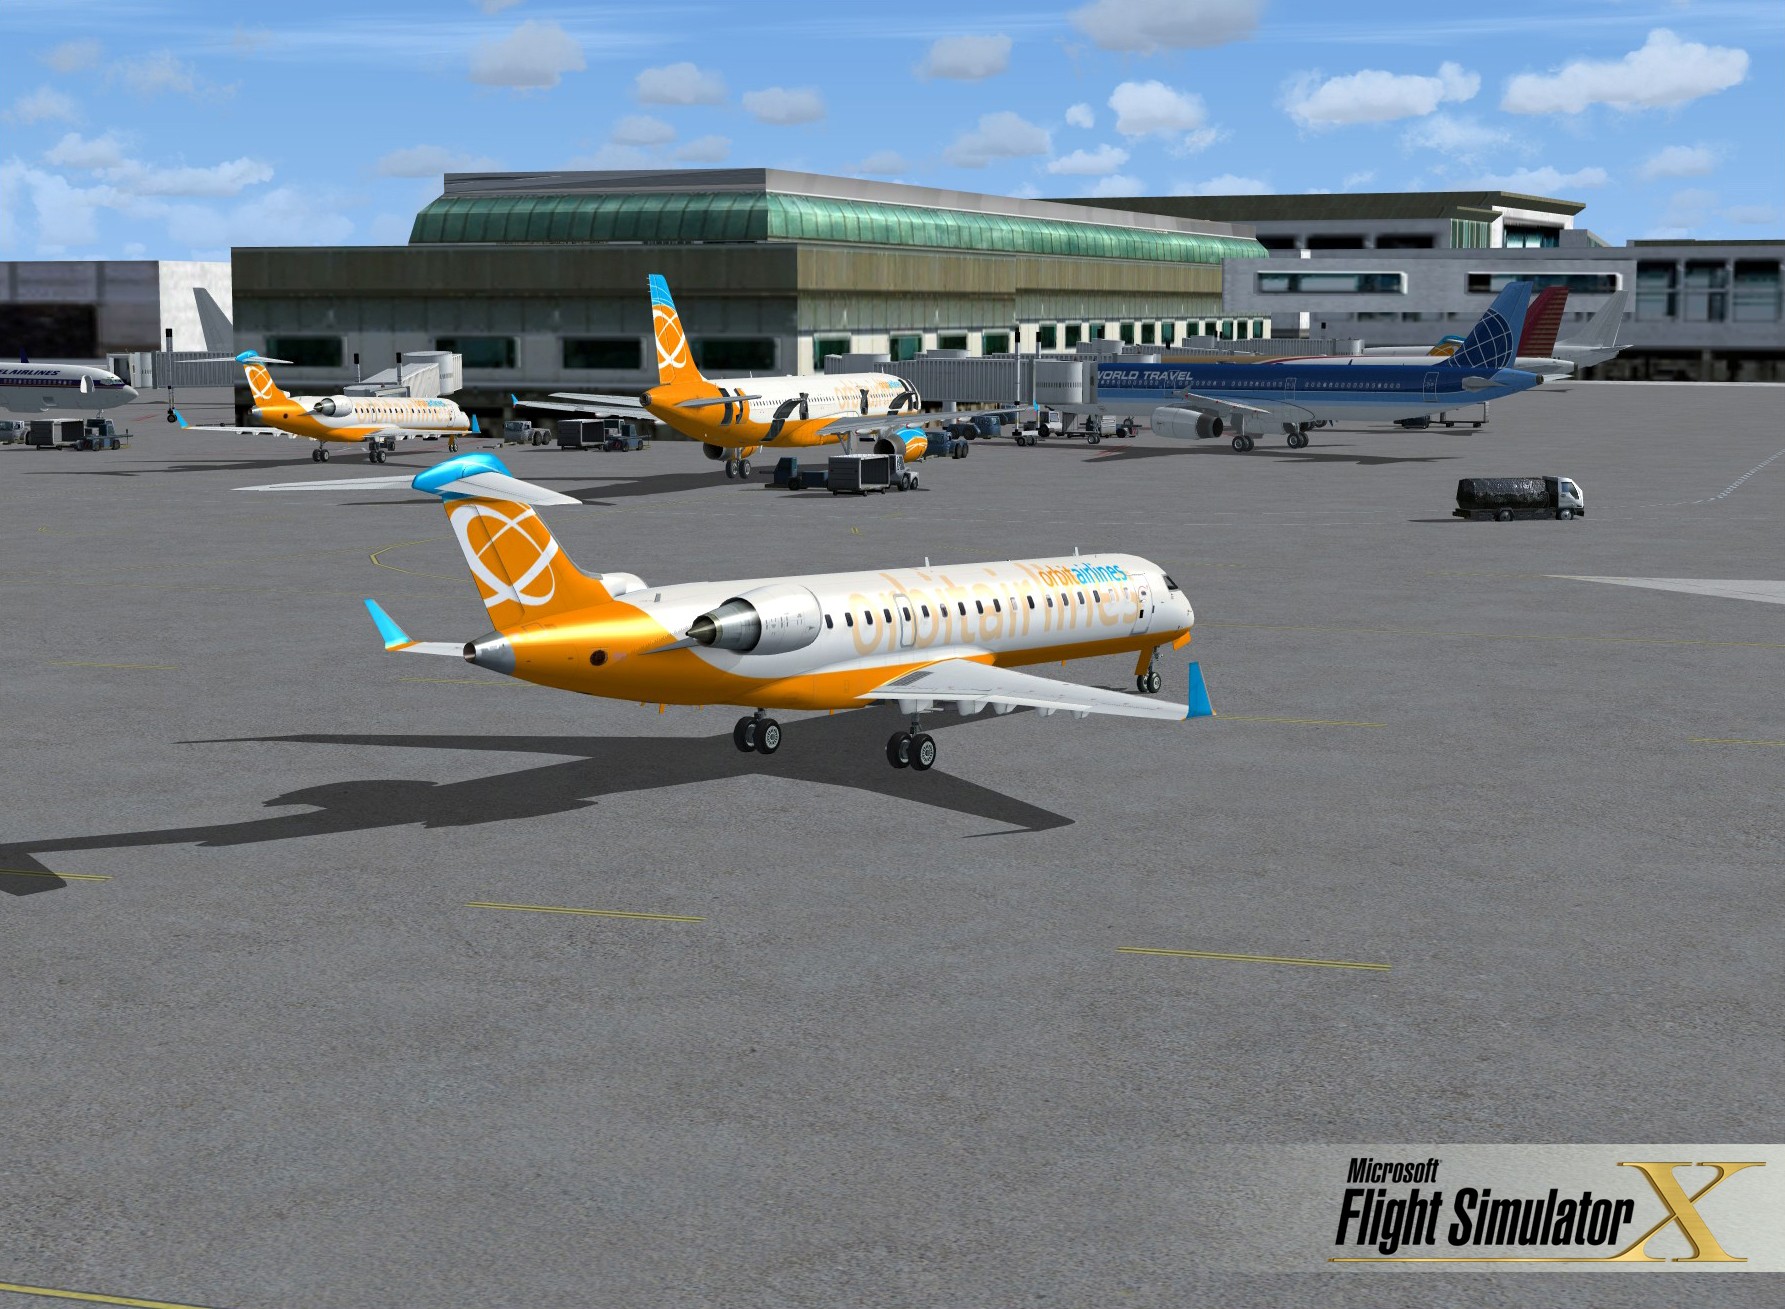 Flight-Simulator-X-1.jpg